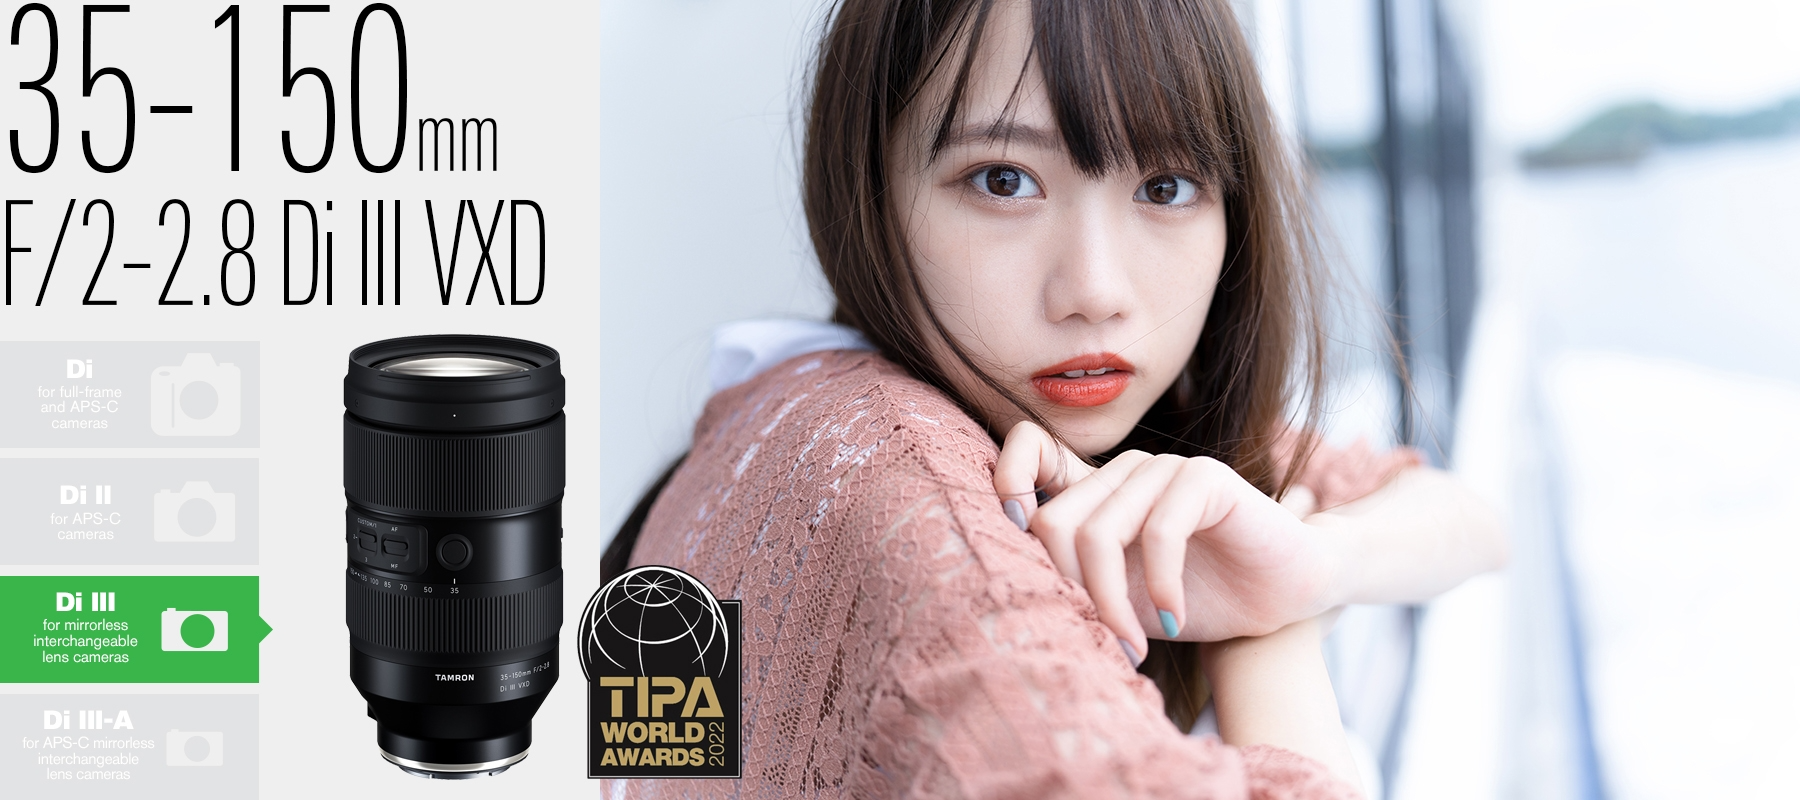 35-150mm for Sony & Nikon Z Mirrorless(Model A058)